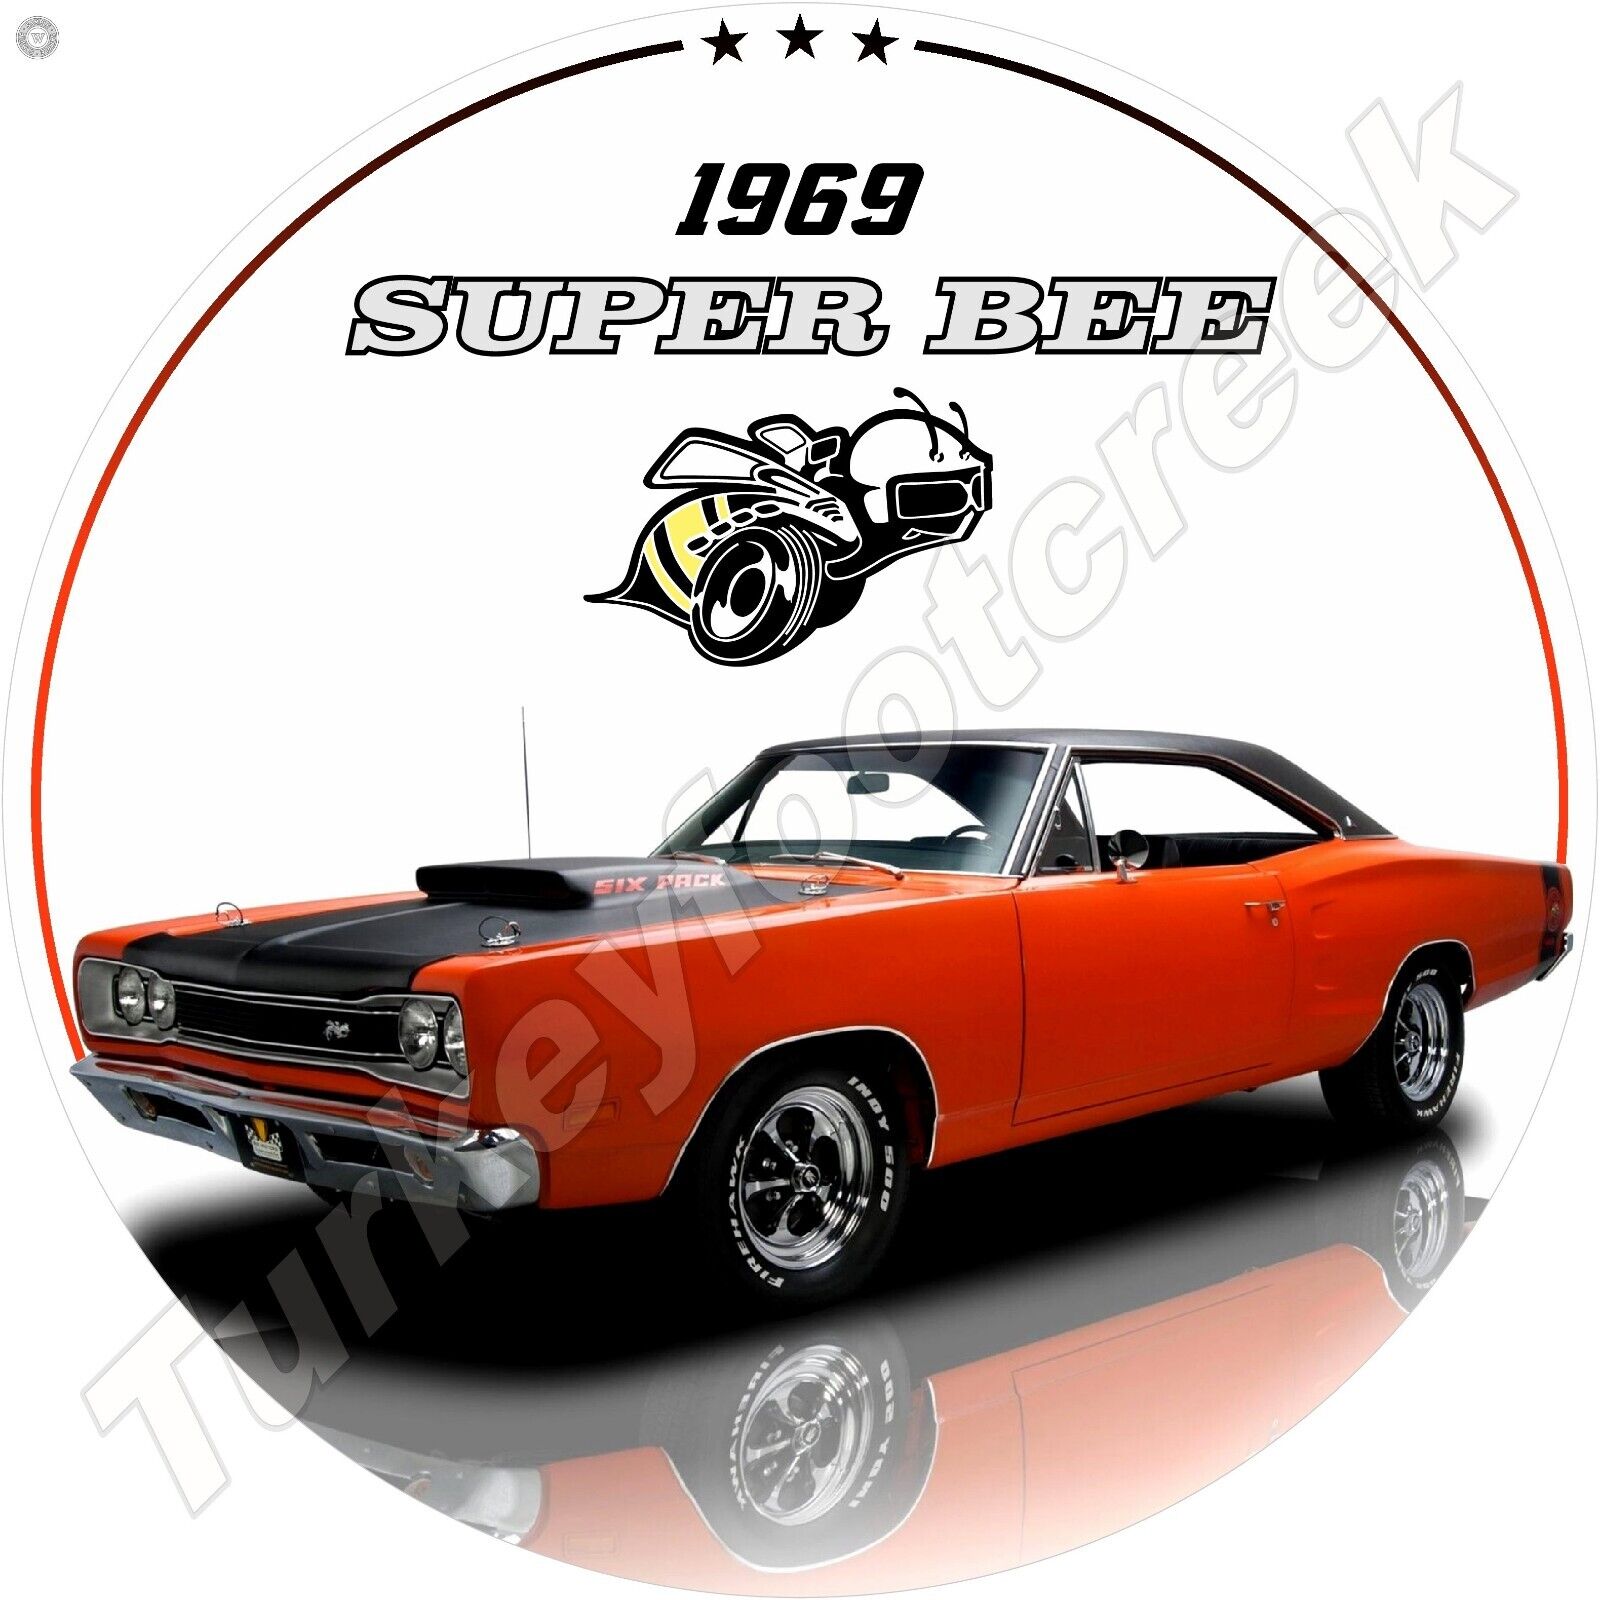 1969 Super Bee 11.75in ROUND METAL SIGN